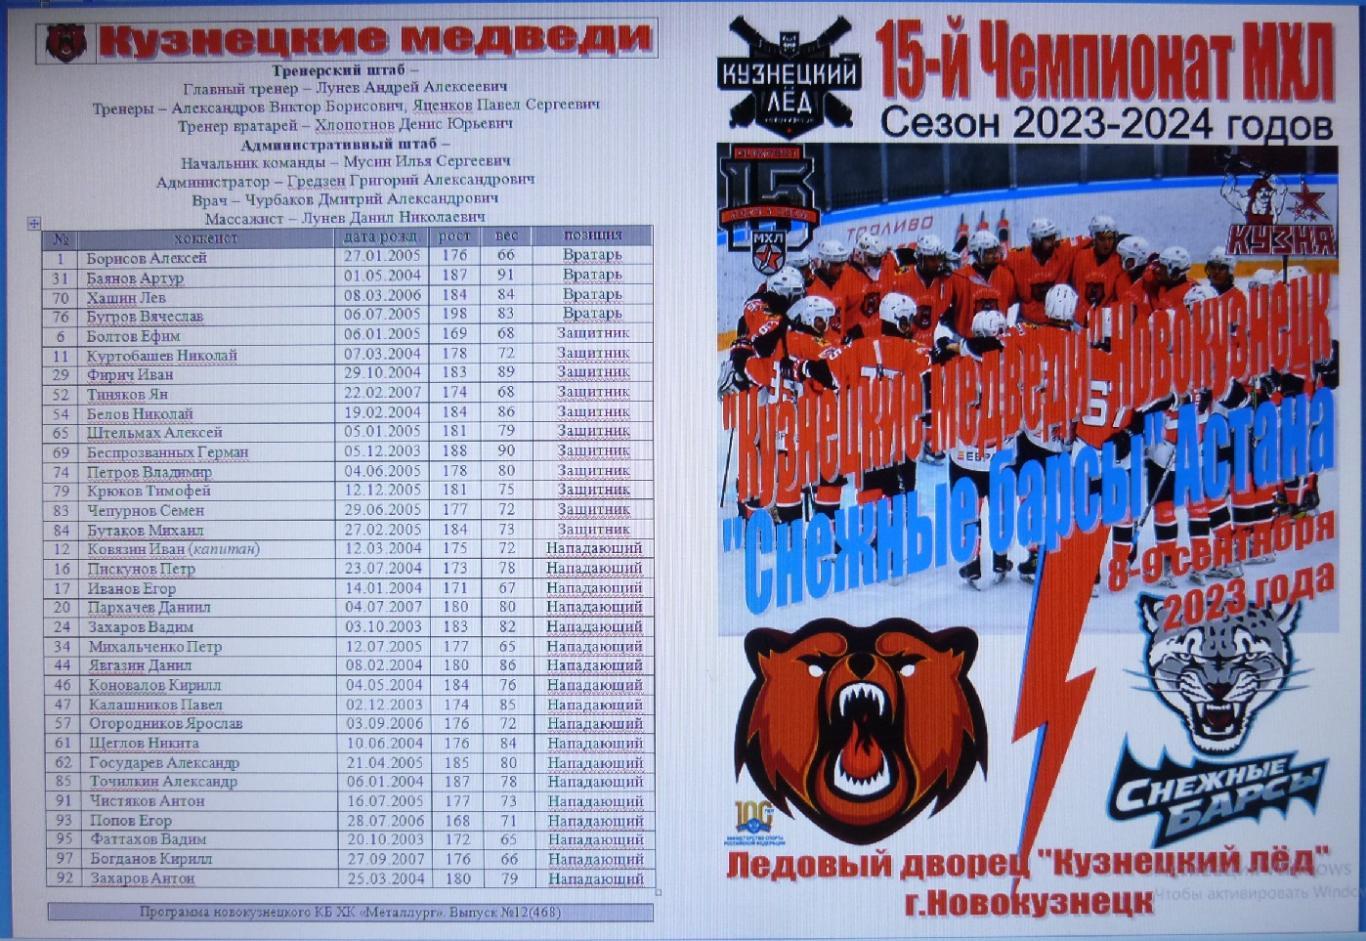 Кузнецкие медведи(Новокузнецк) - Снежные барсы(Астана) - 2023/24 - 1